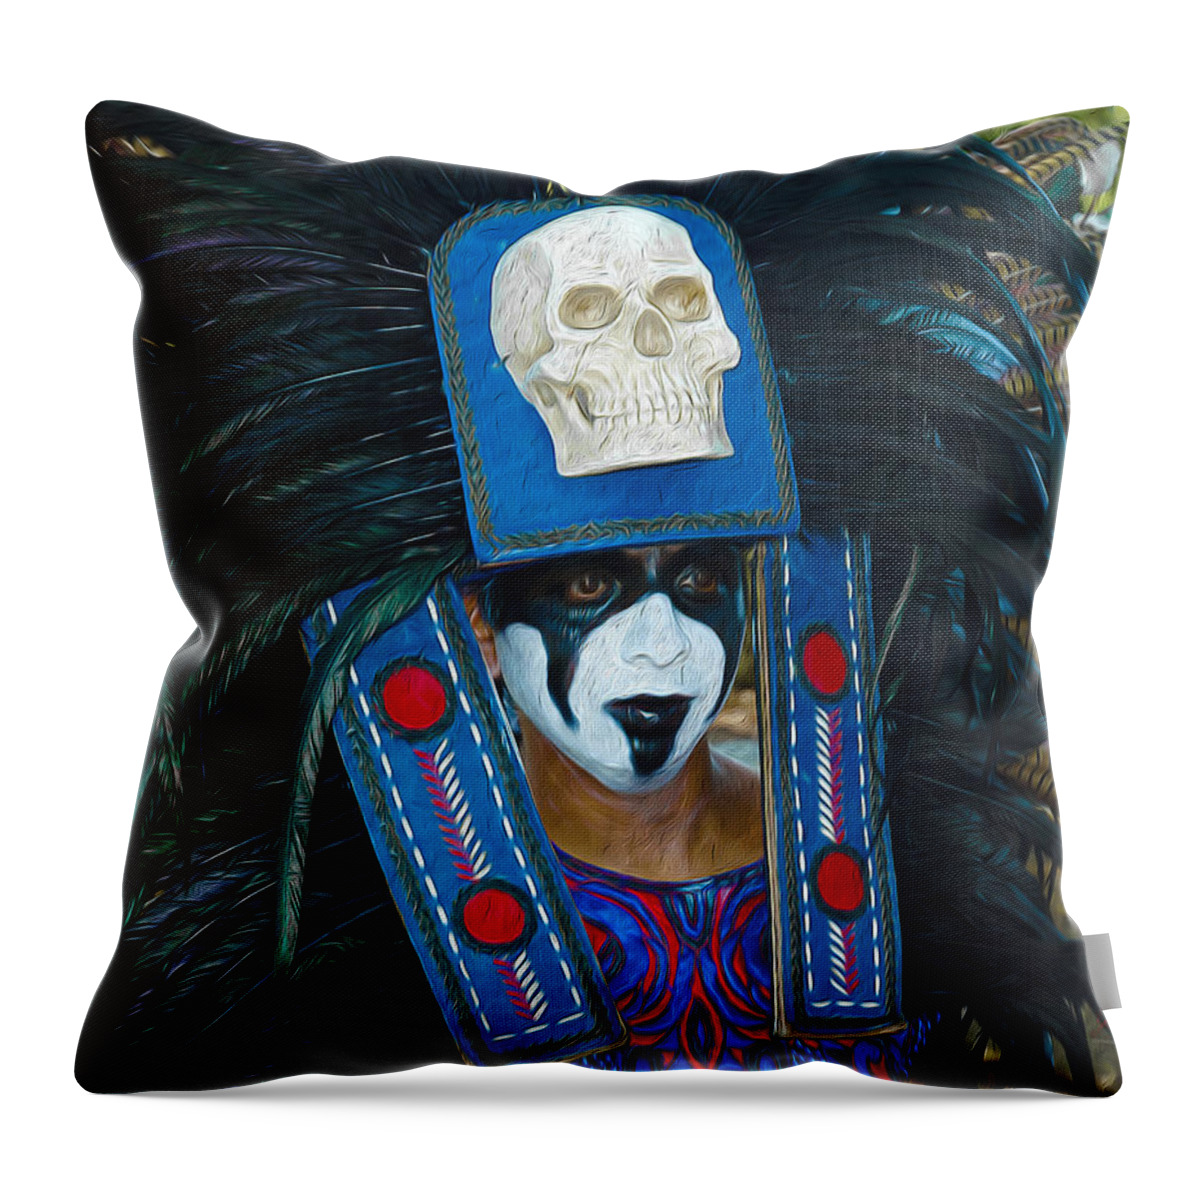 American Indian Throw Pillow featuring the digital art Medicine Man Oil Version by Joe Paradis